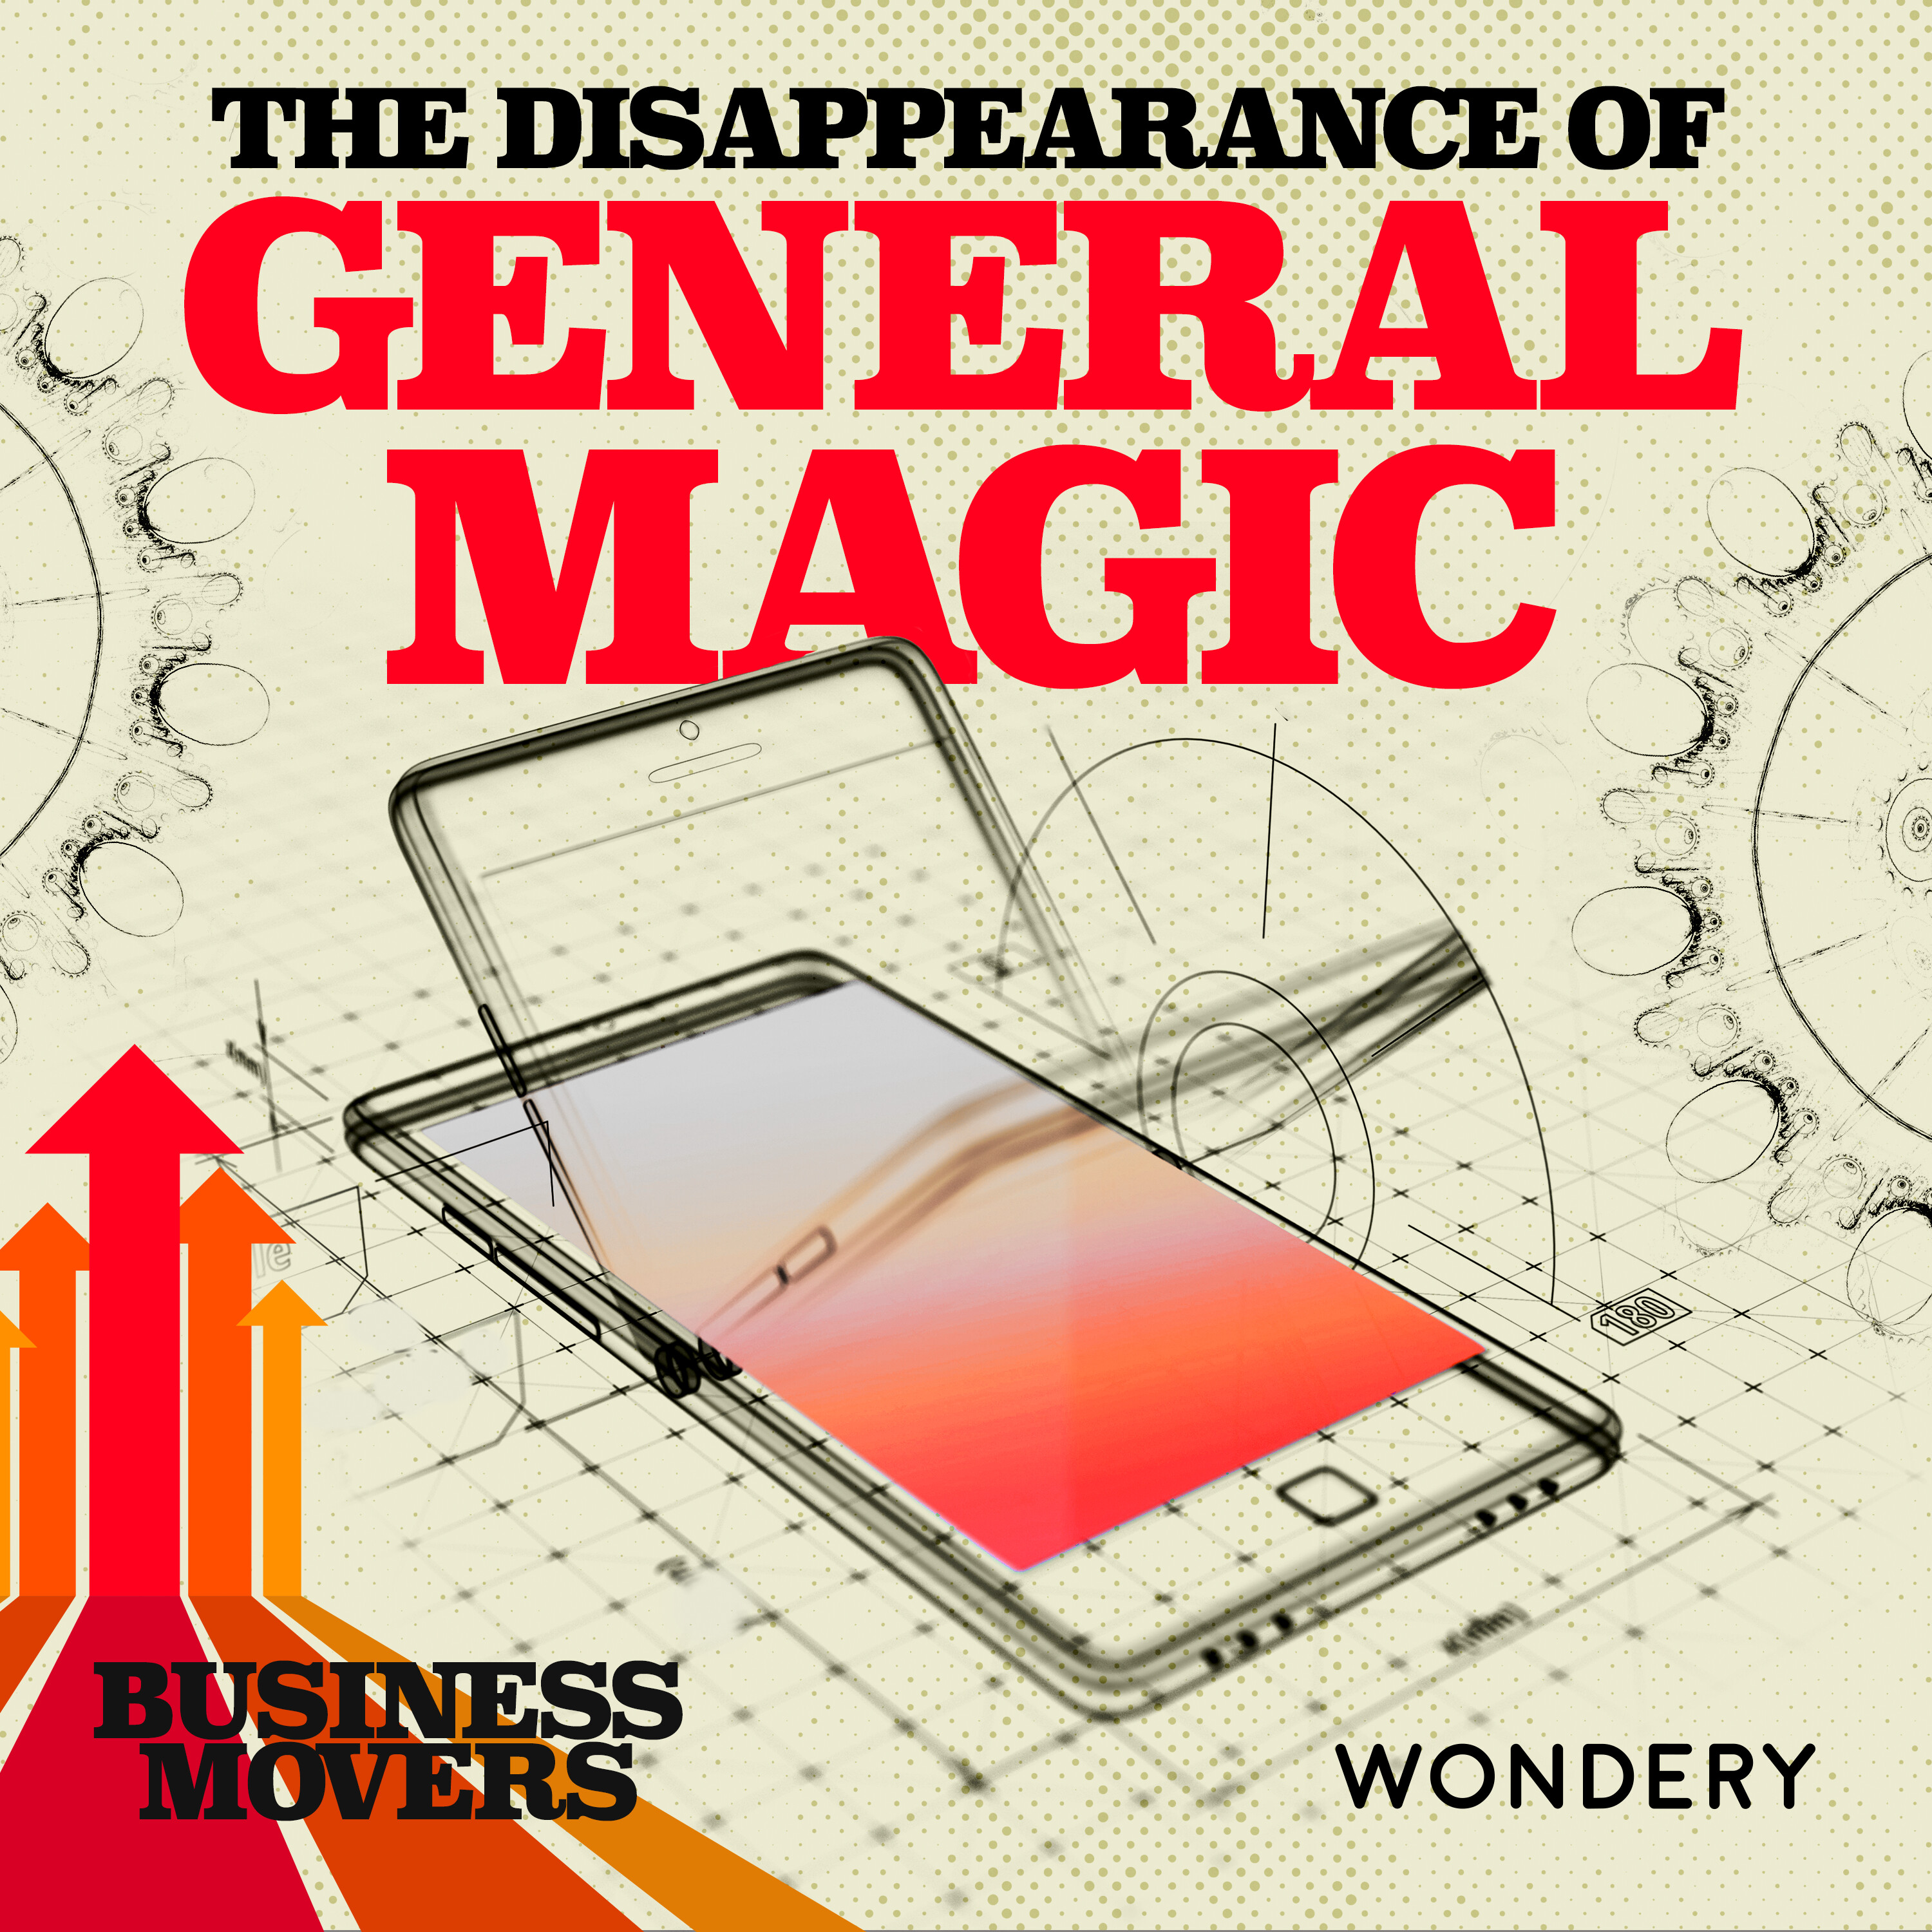 The Disappearance of General Magic | Filmmaker Sarah Kerruish on her documentary ‘General Magic’ | 5